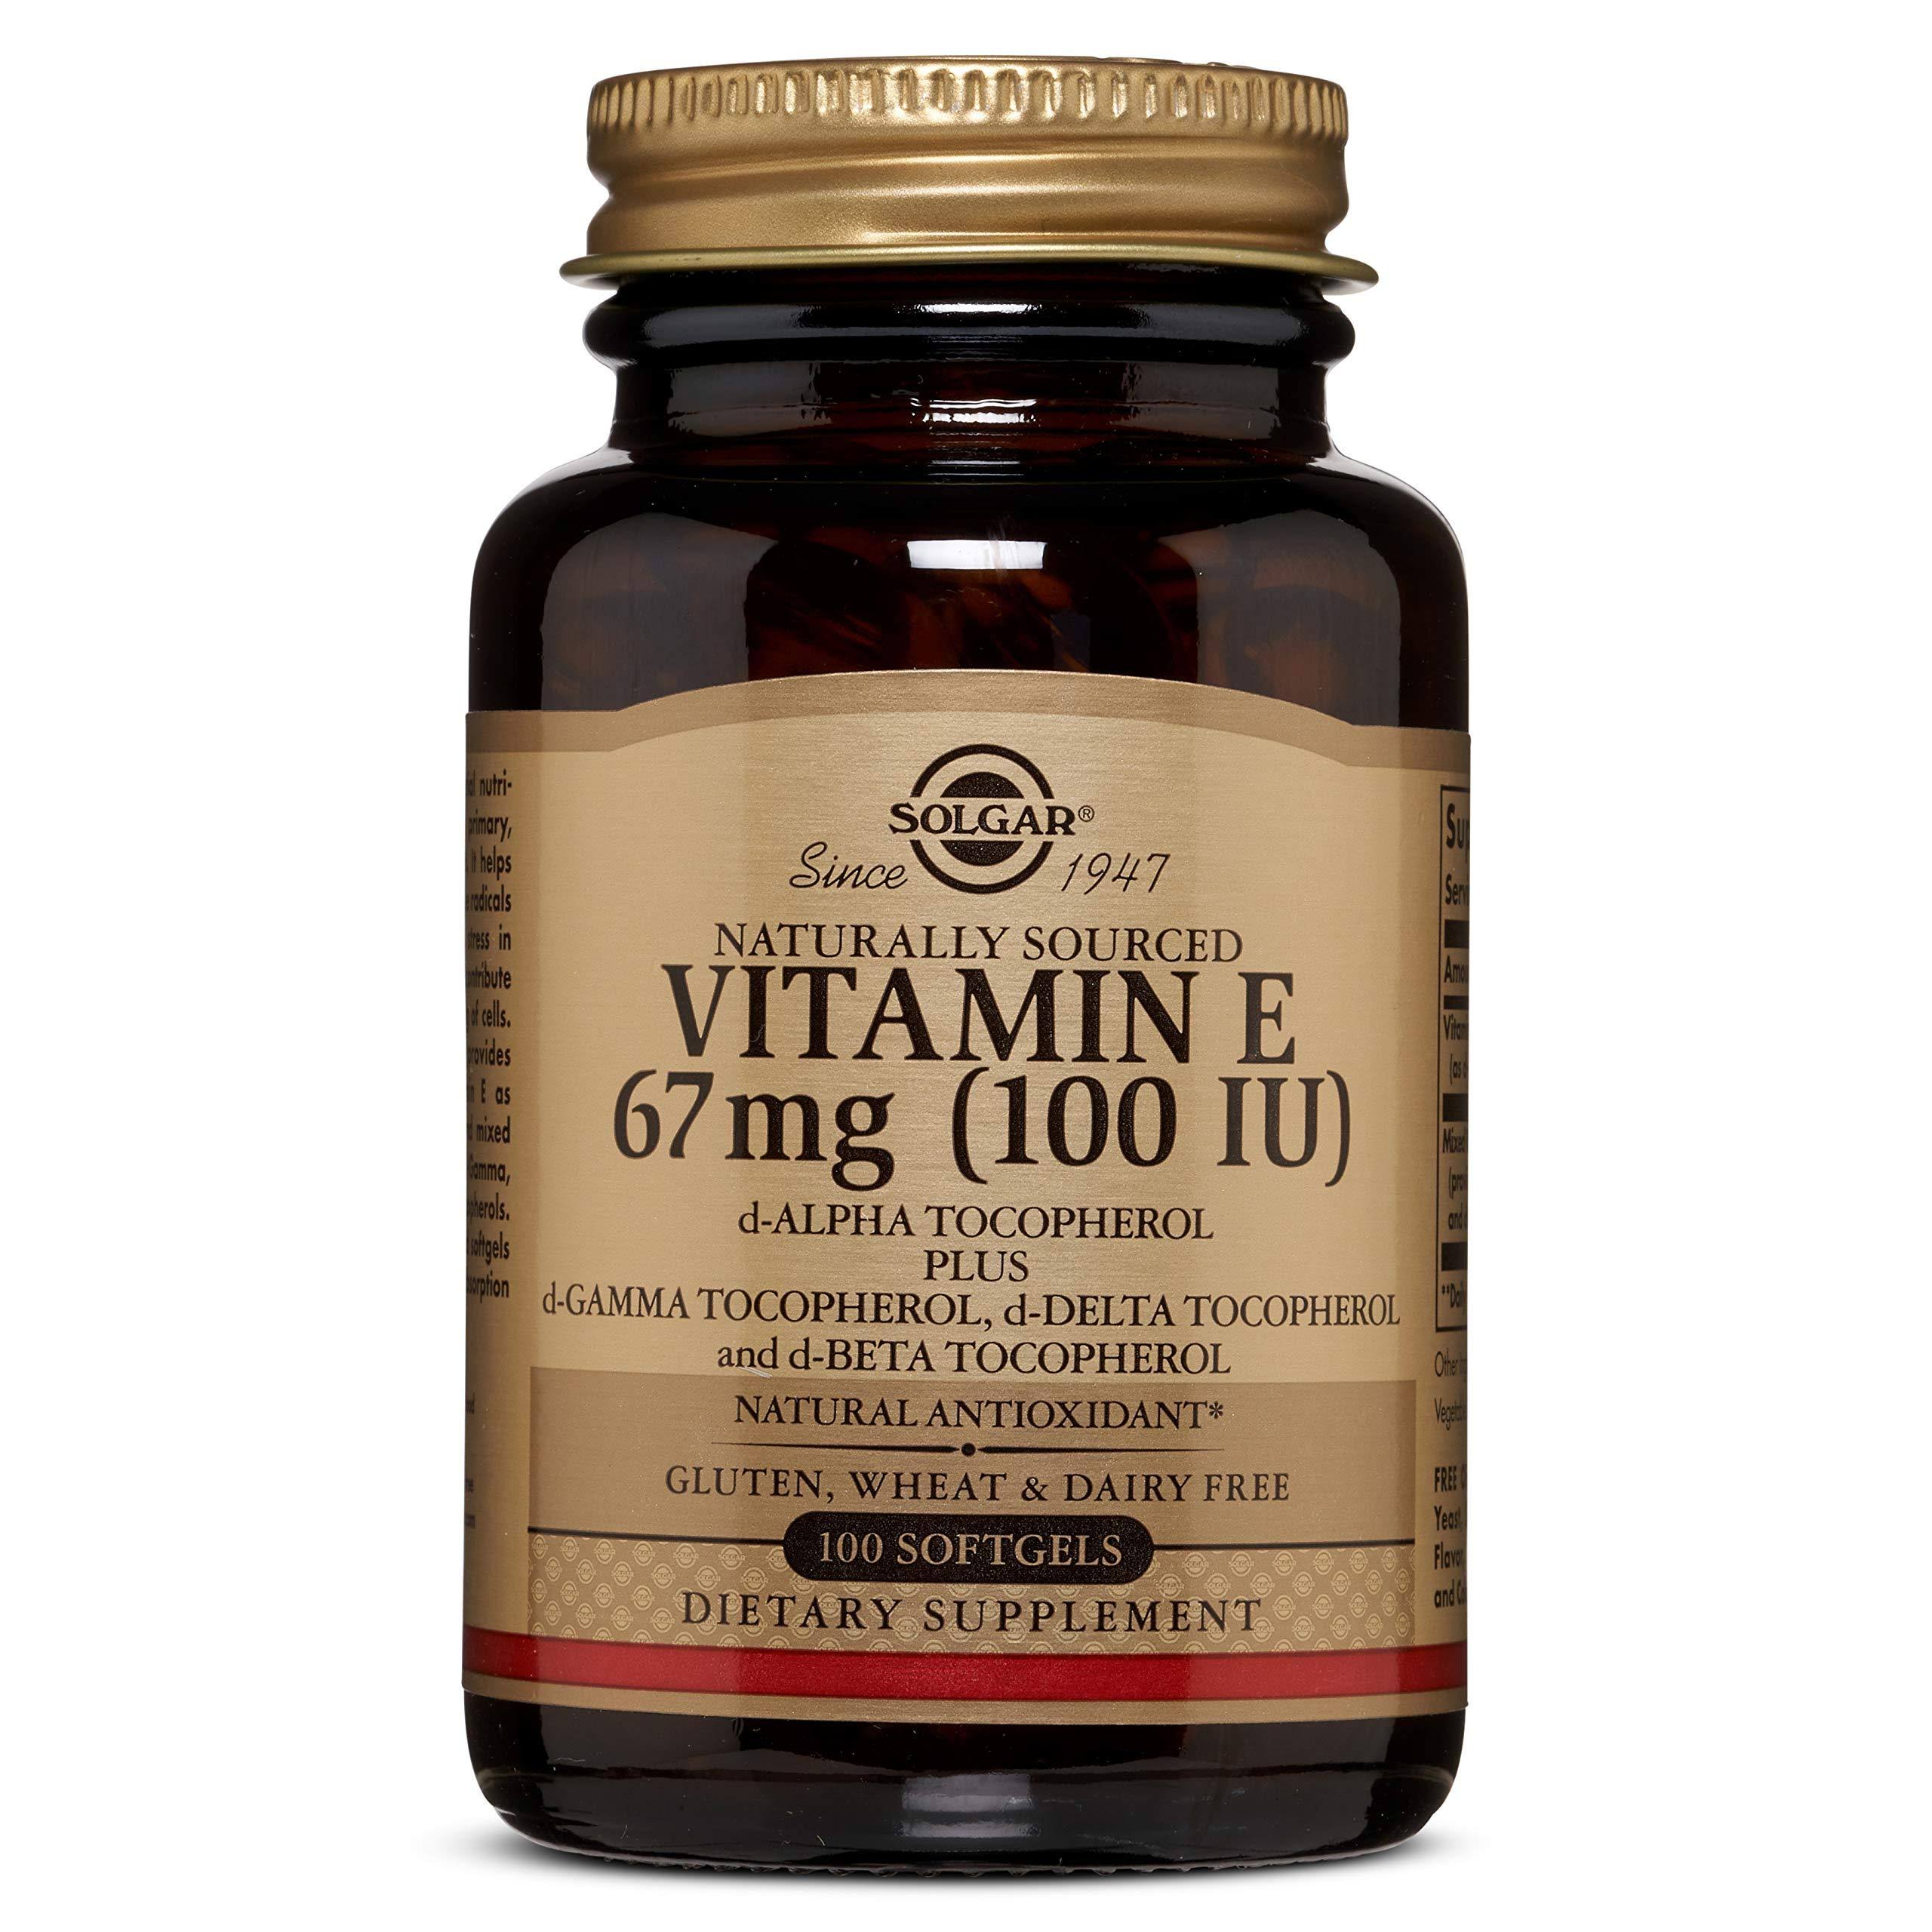 Solgar Vitamin E 100 IU Dietary Supplement - 100 Softgels